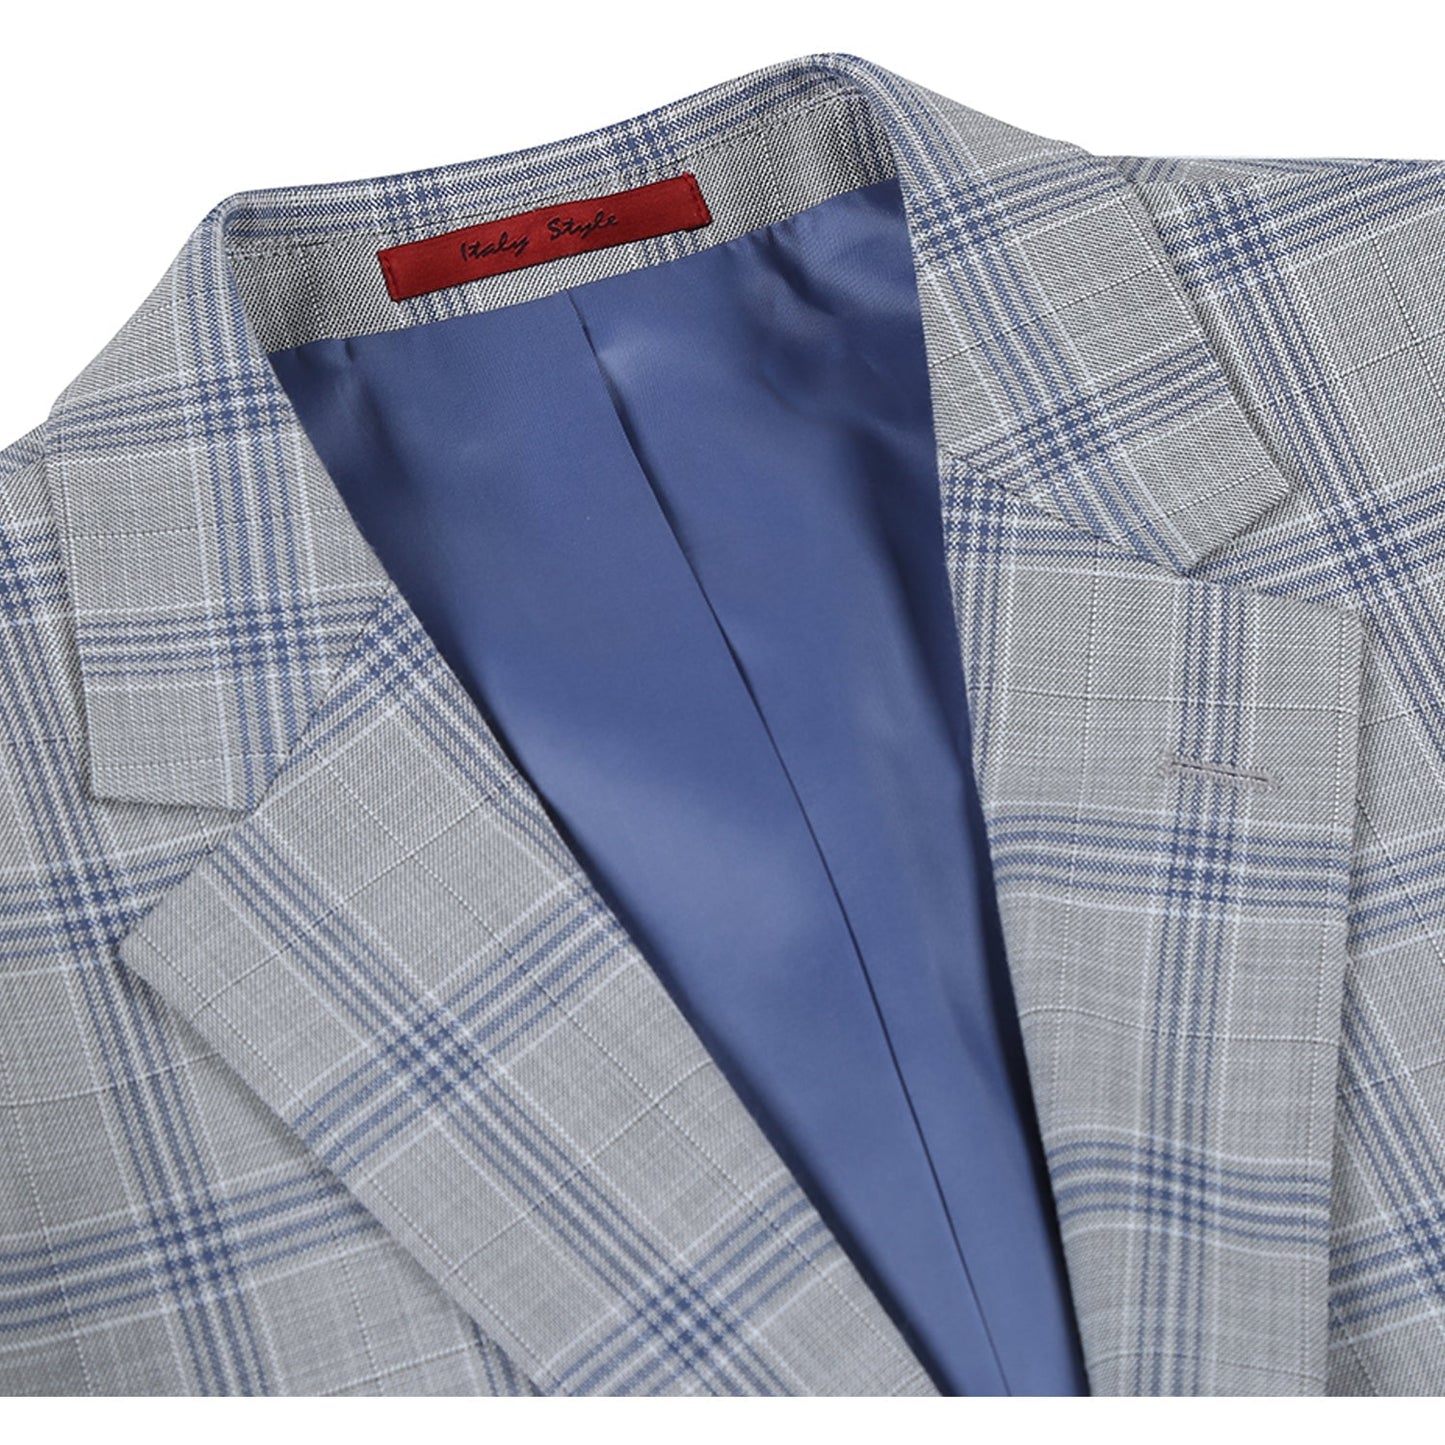 293-15 Men's Slim Fit Notch Lapel Light Gray and Blue Windowpane Suit